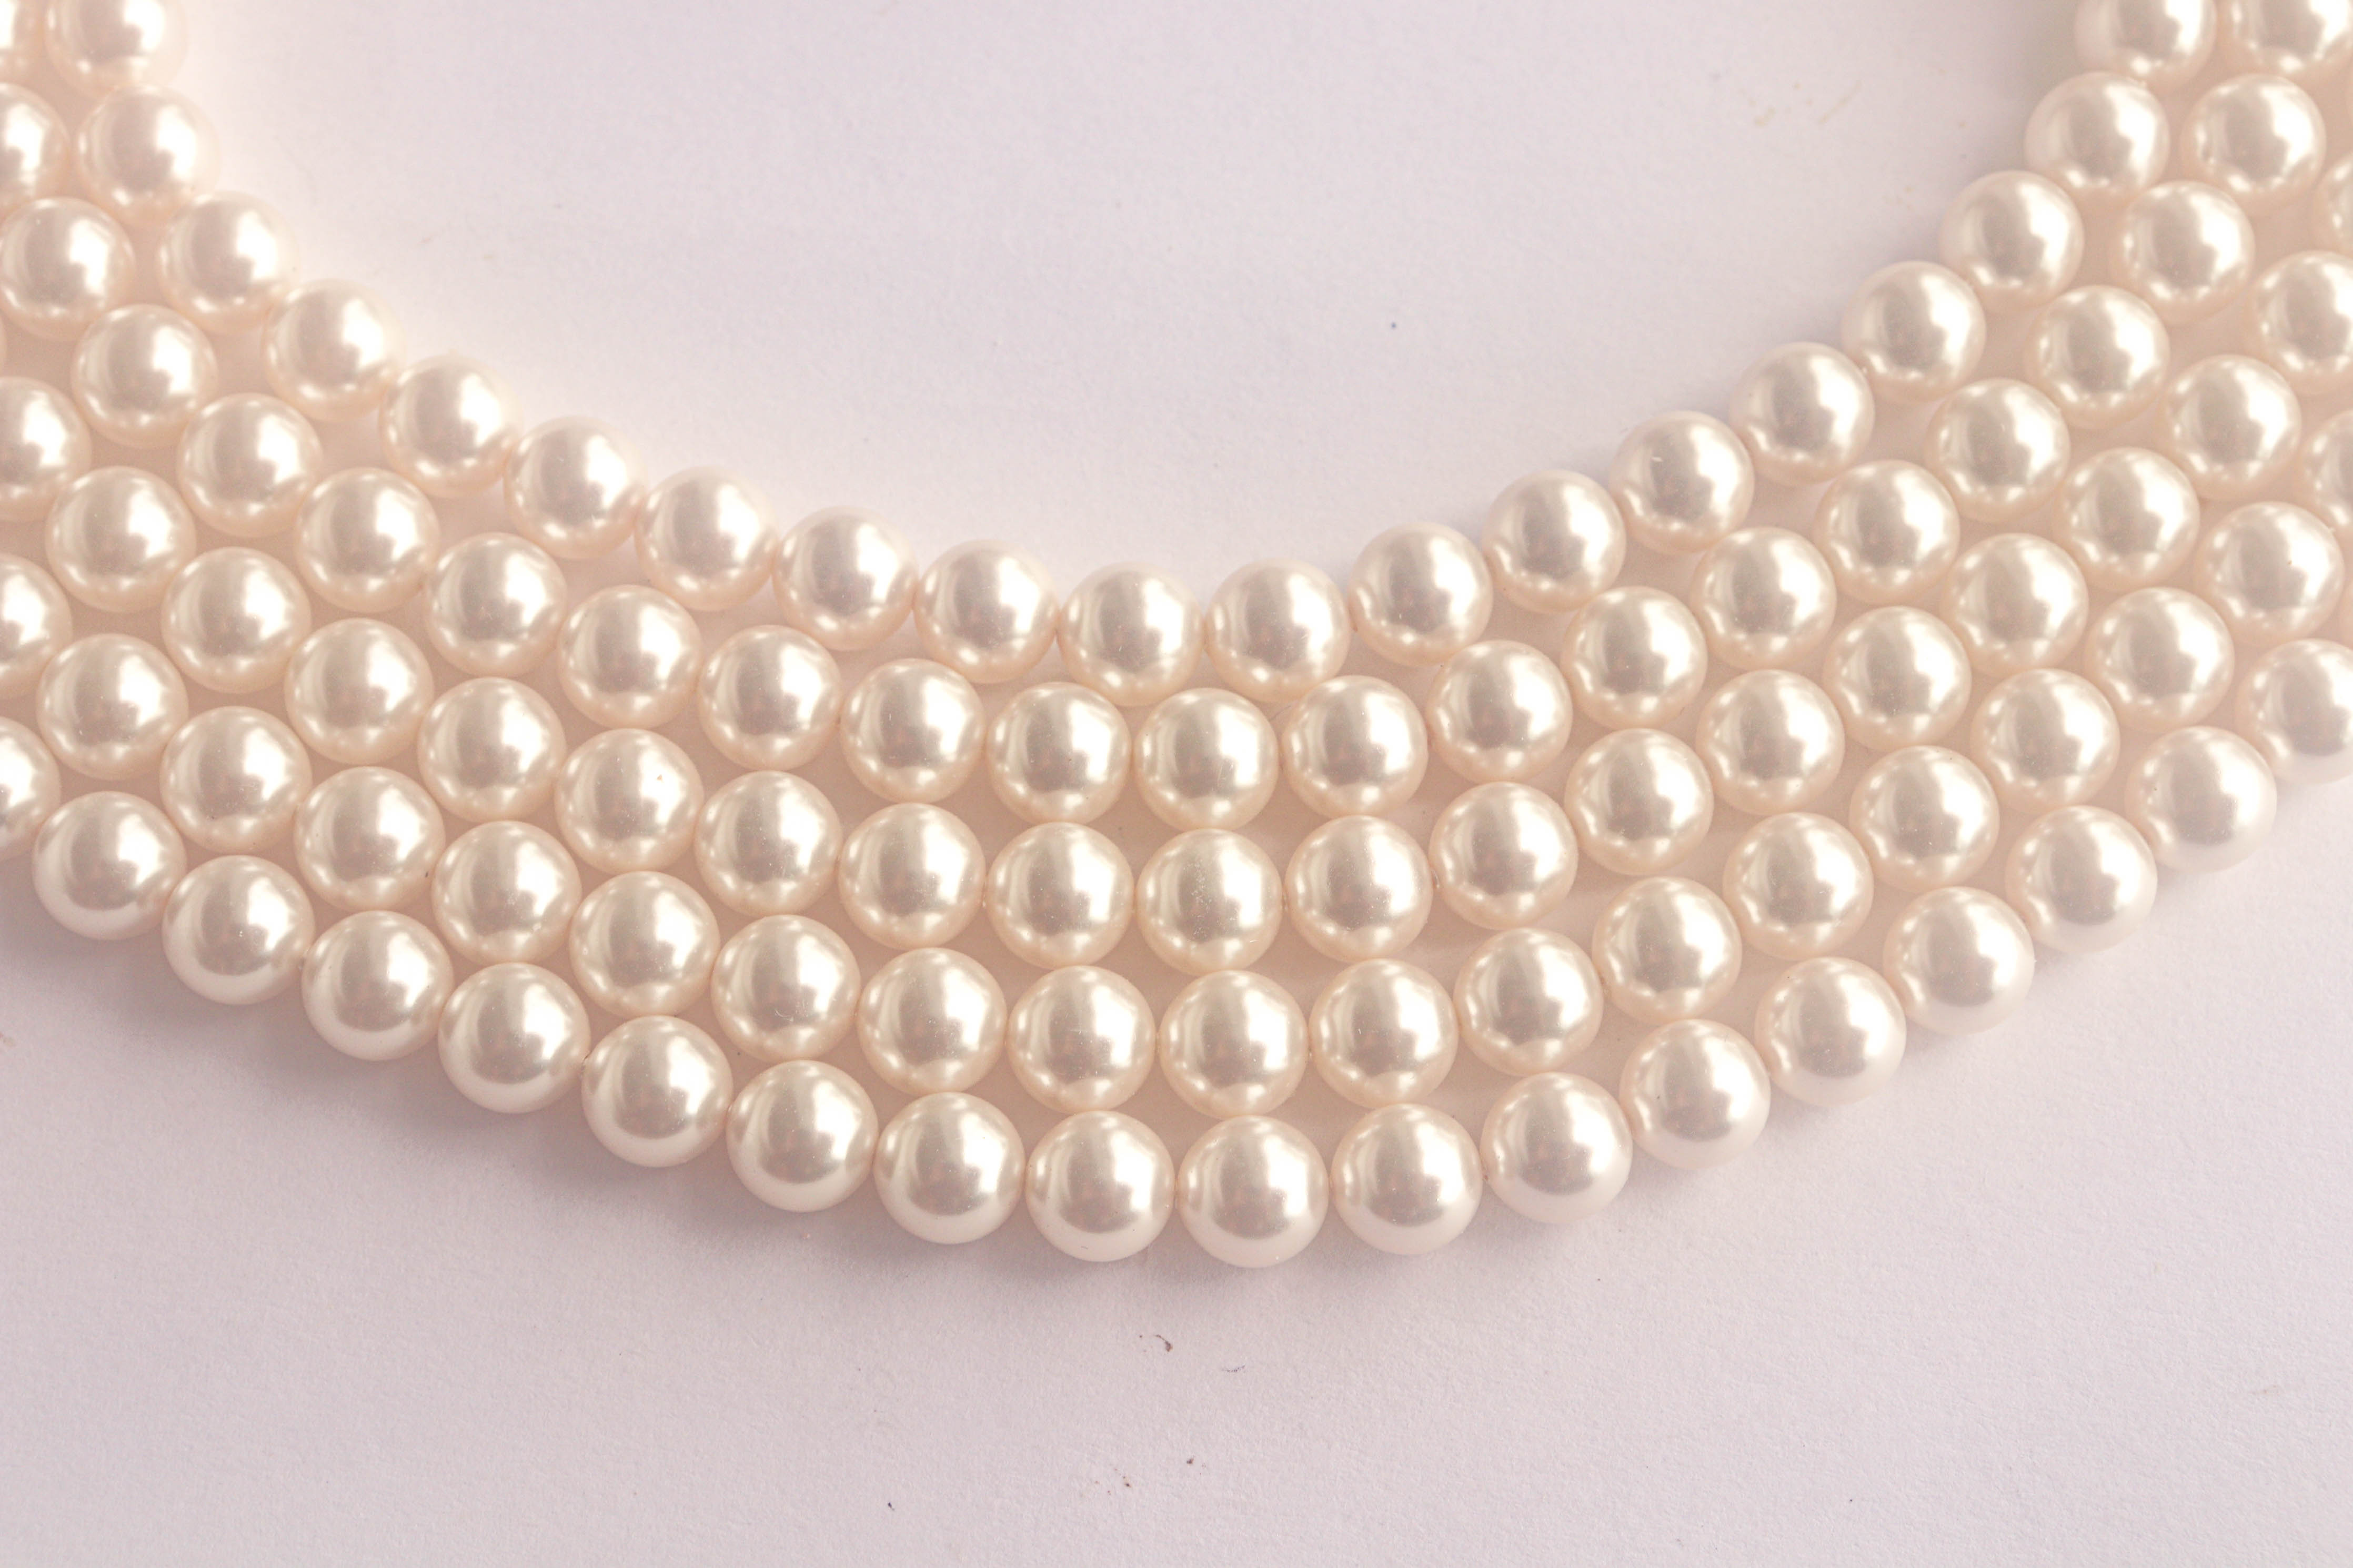 10mm Crystal White (001 650) Genuine Swarovski 5810 Pearls Round Beads jewelry making Beadsforyourjewelry